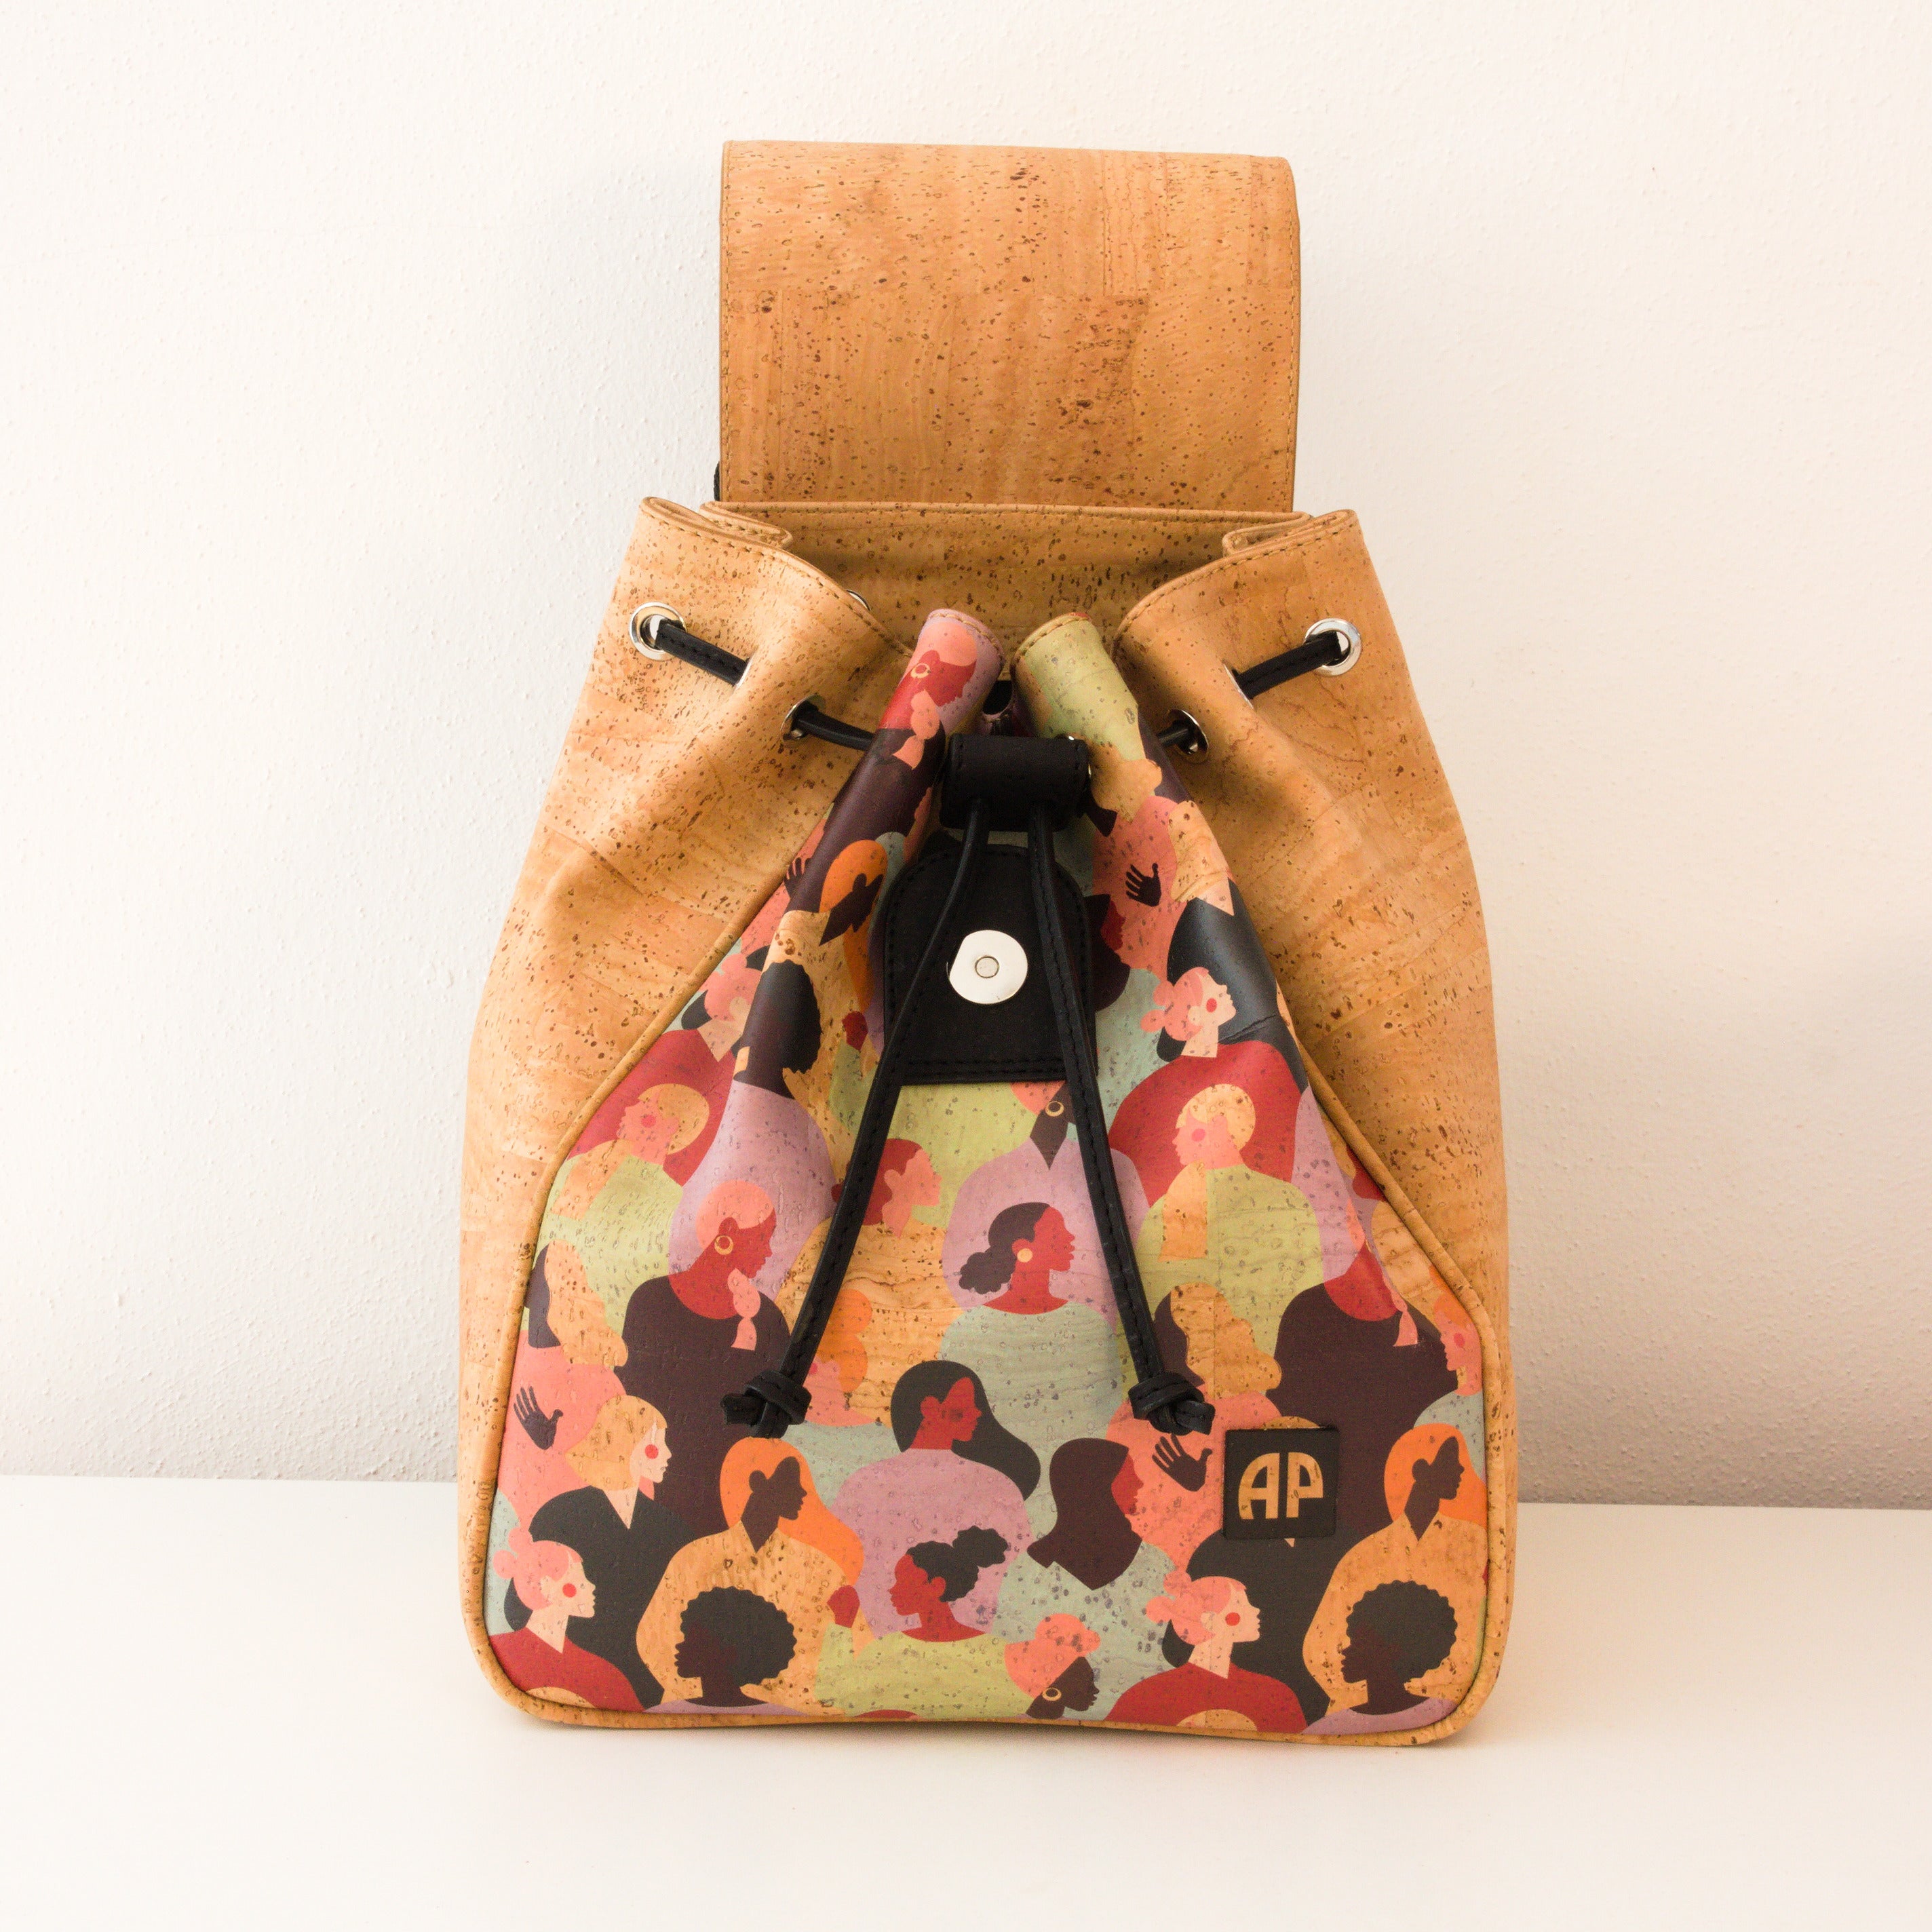 Cork backpack * in 2 designs * backpack for women * backpack made of cork * handmade in Portugal